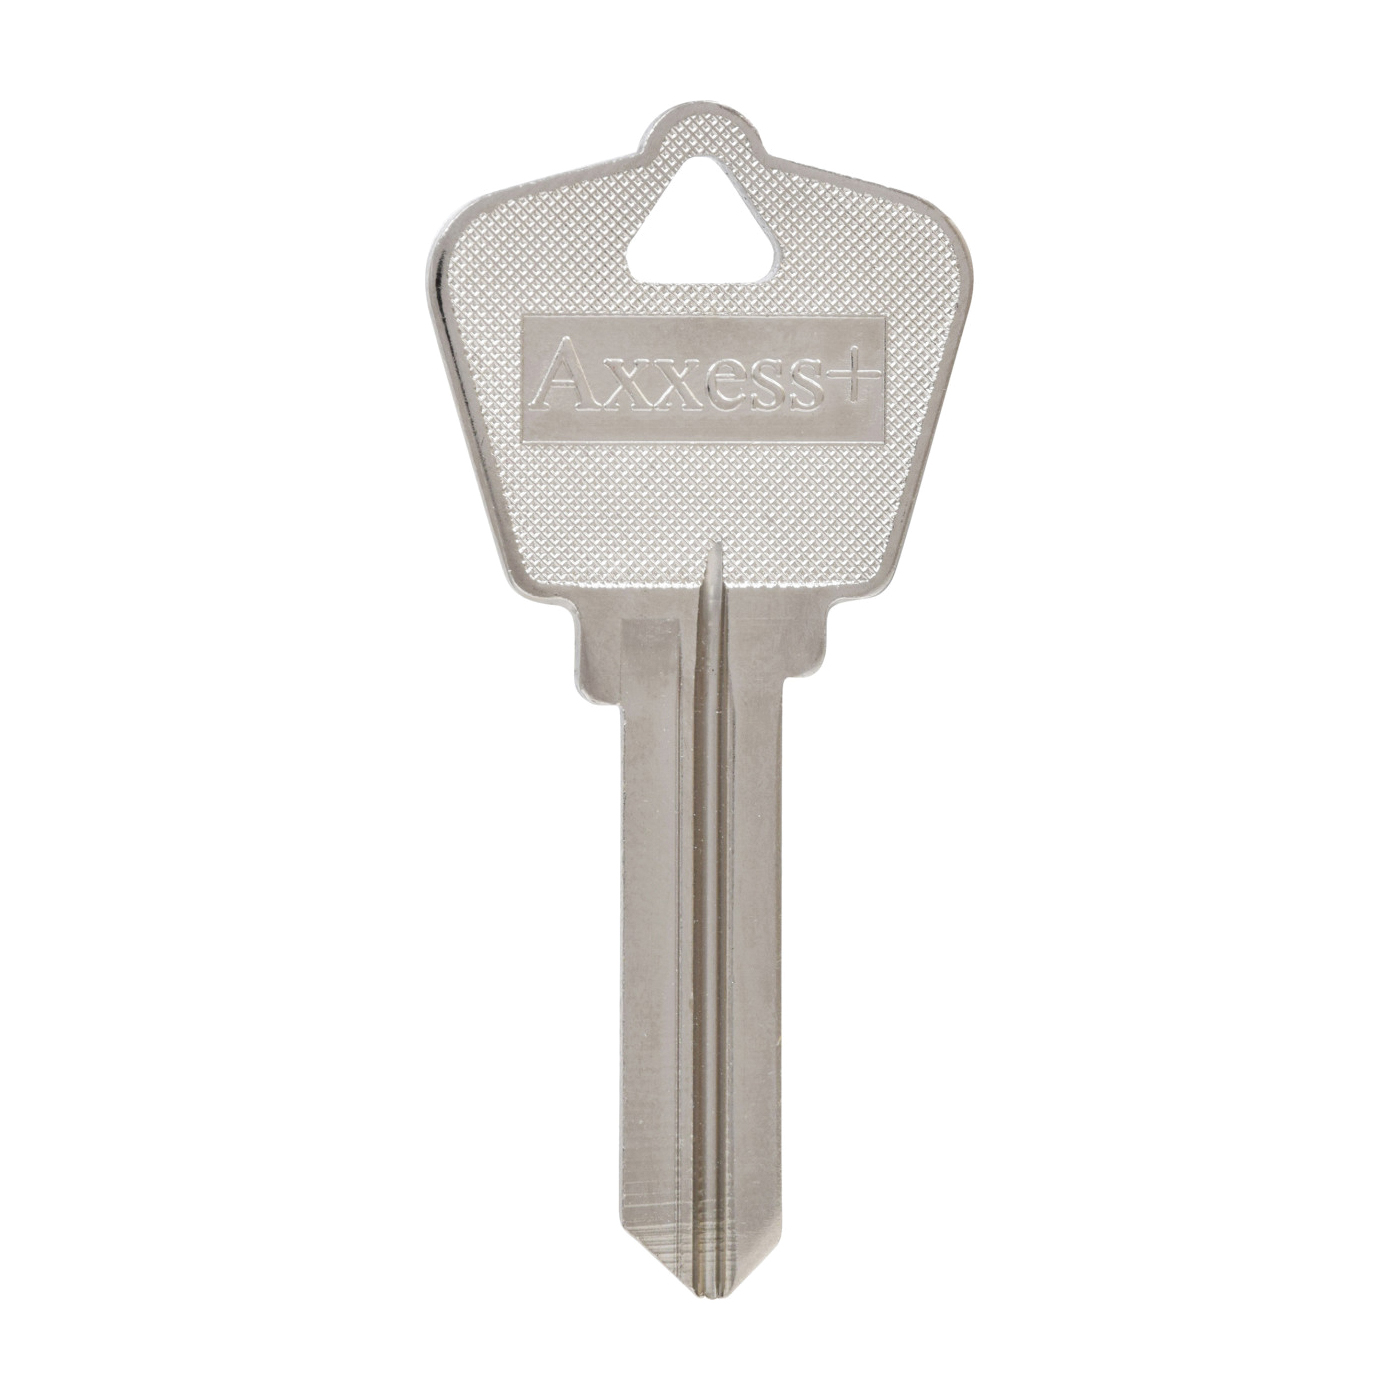 88536 Key Blank, Brass, Nickel-Plated, For: Arrow Locks